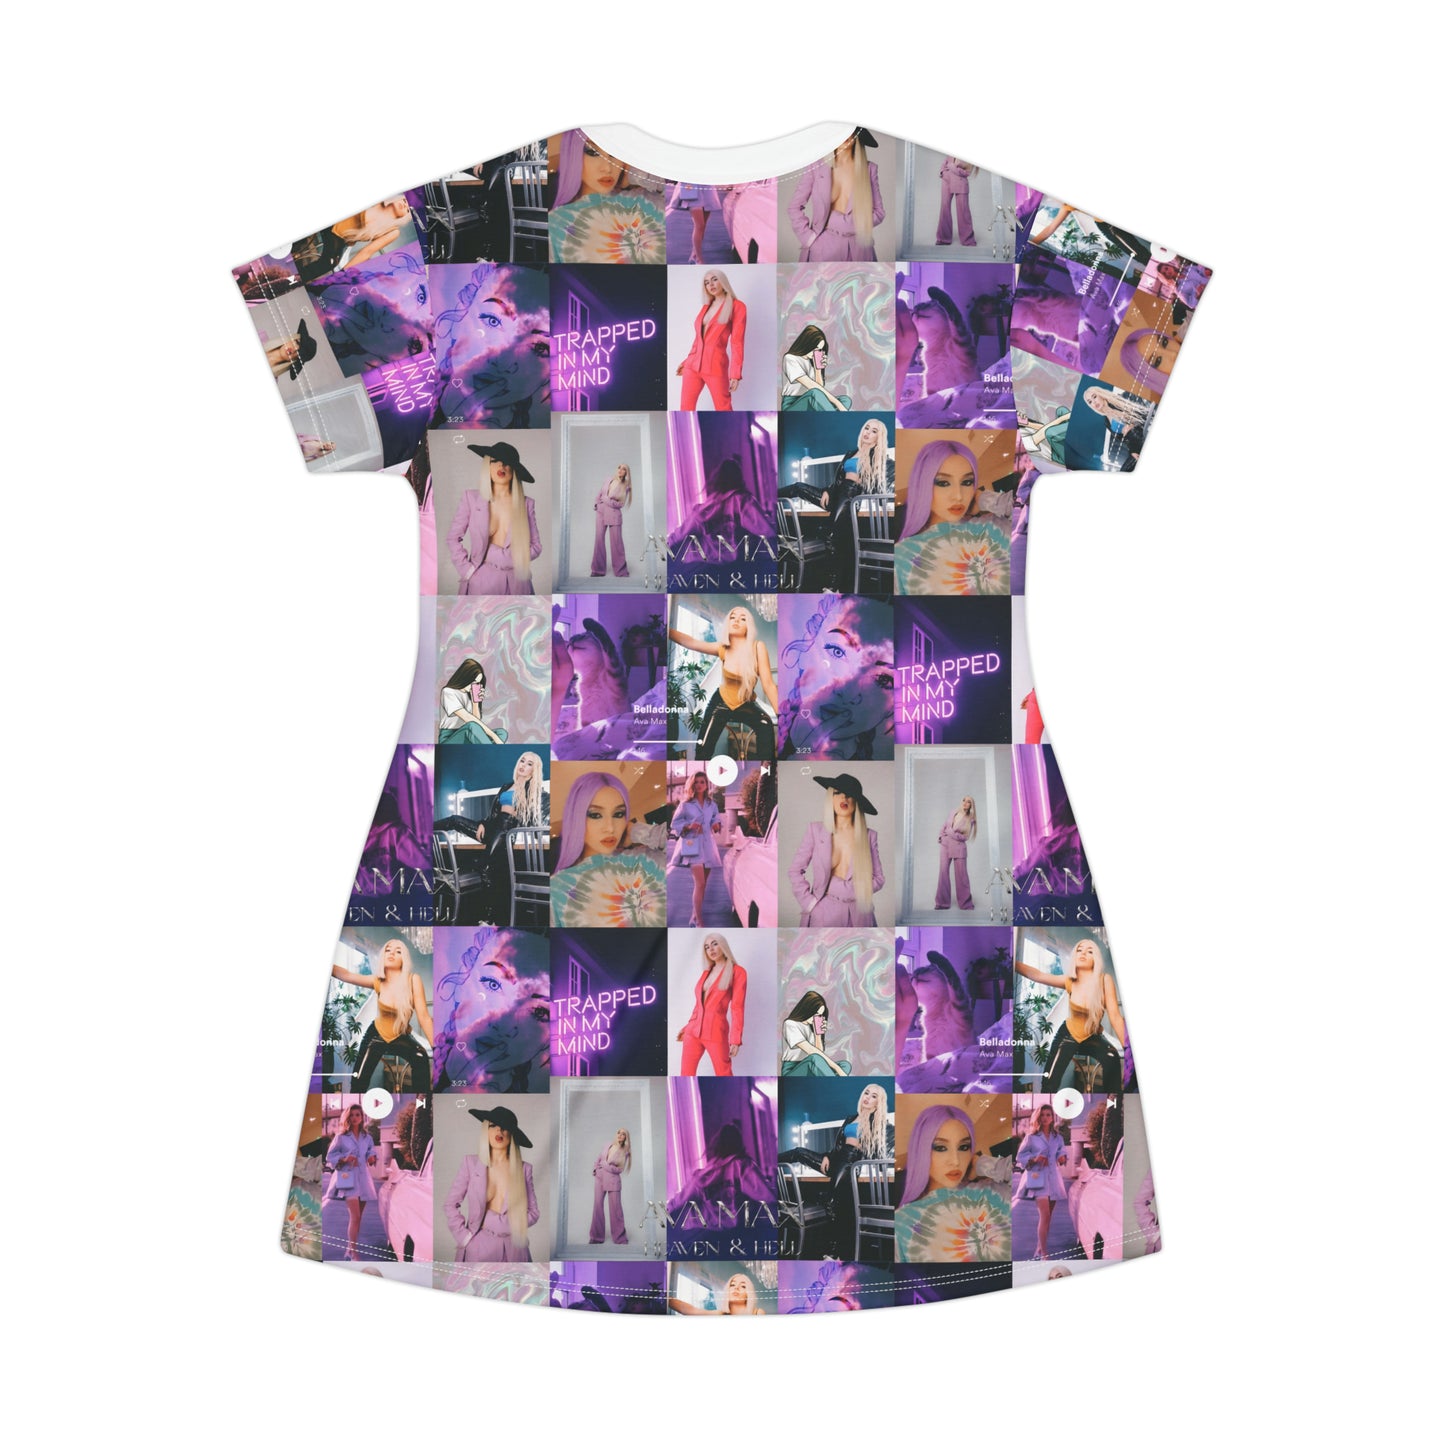 Ava Max Belladonna Photo Collage T-Shirt Dress